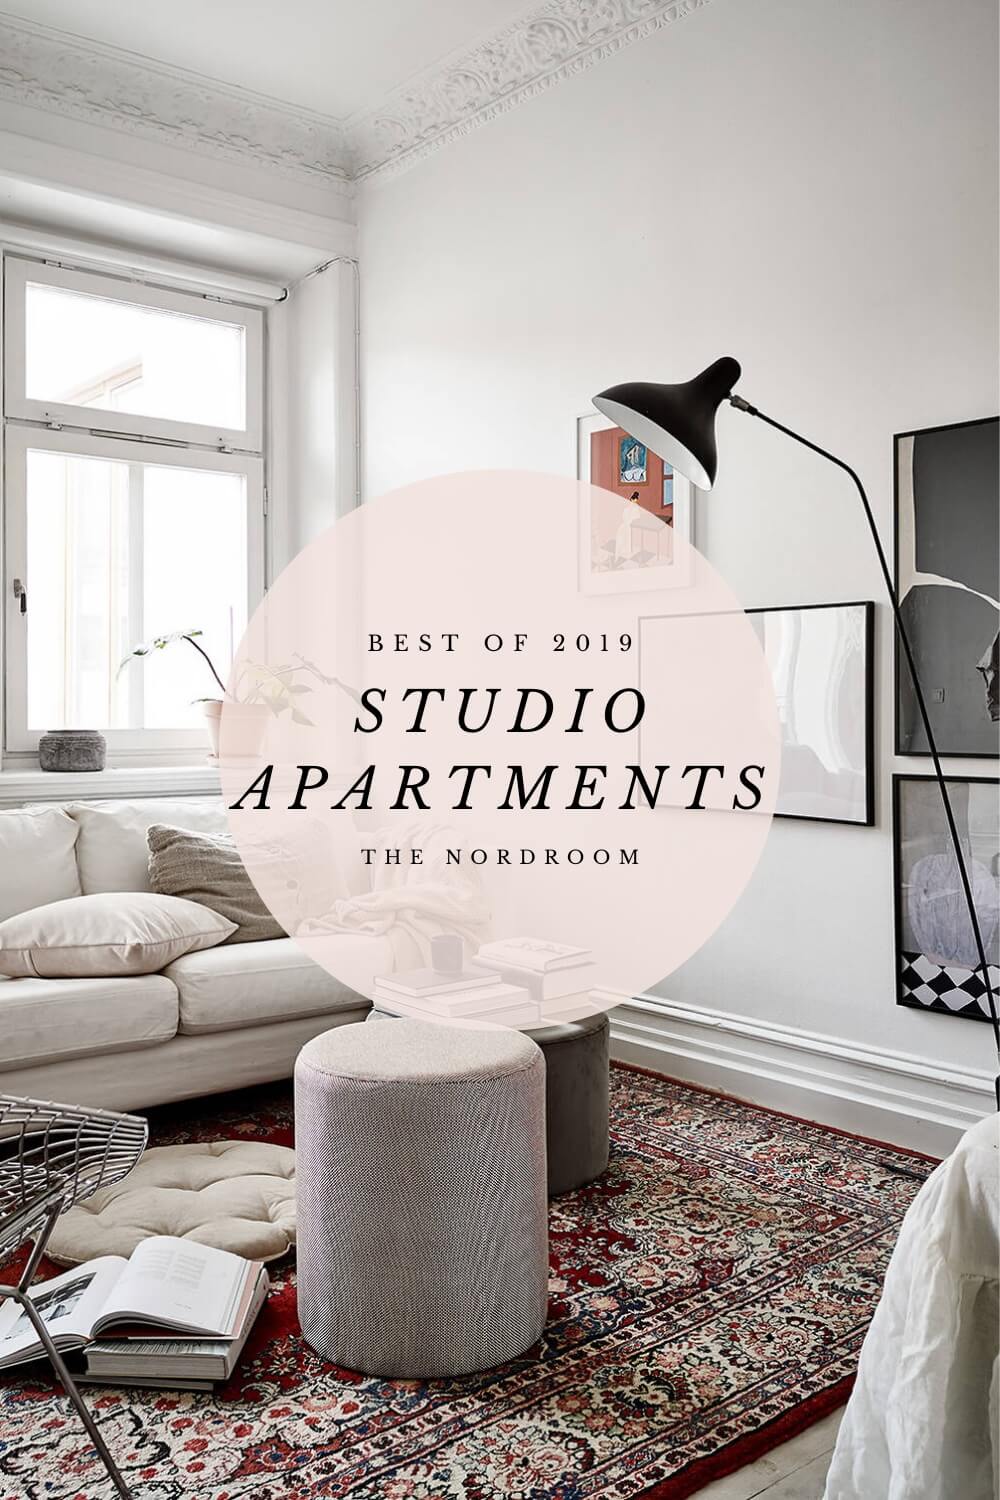 Best of 2019: Studio Apartments